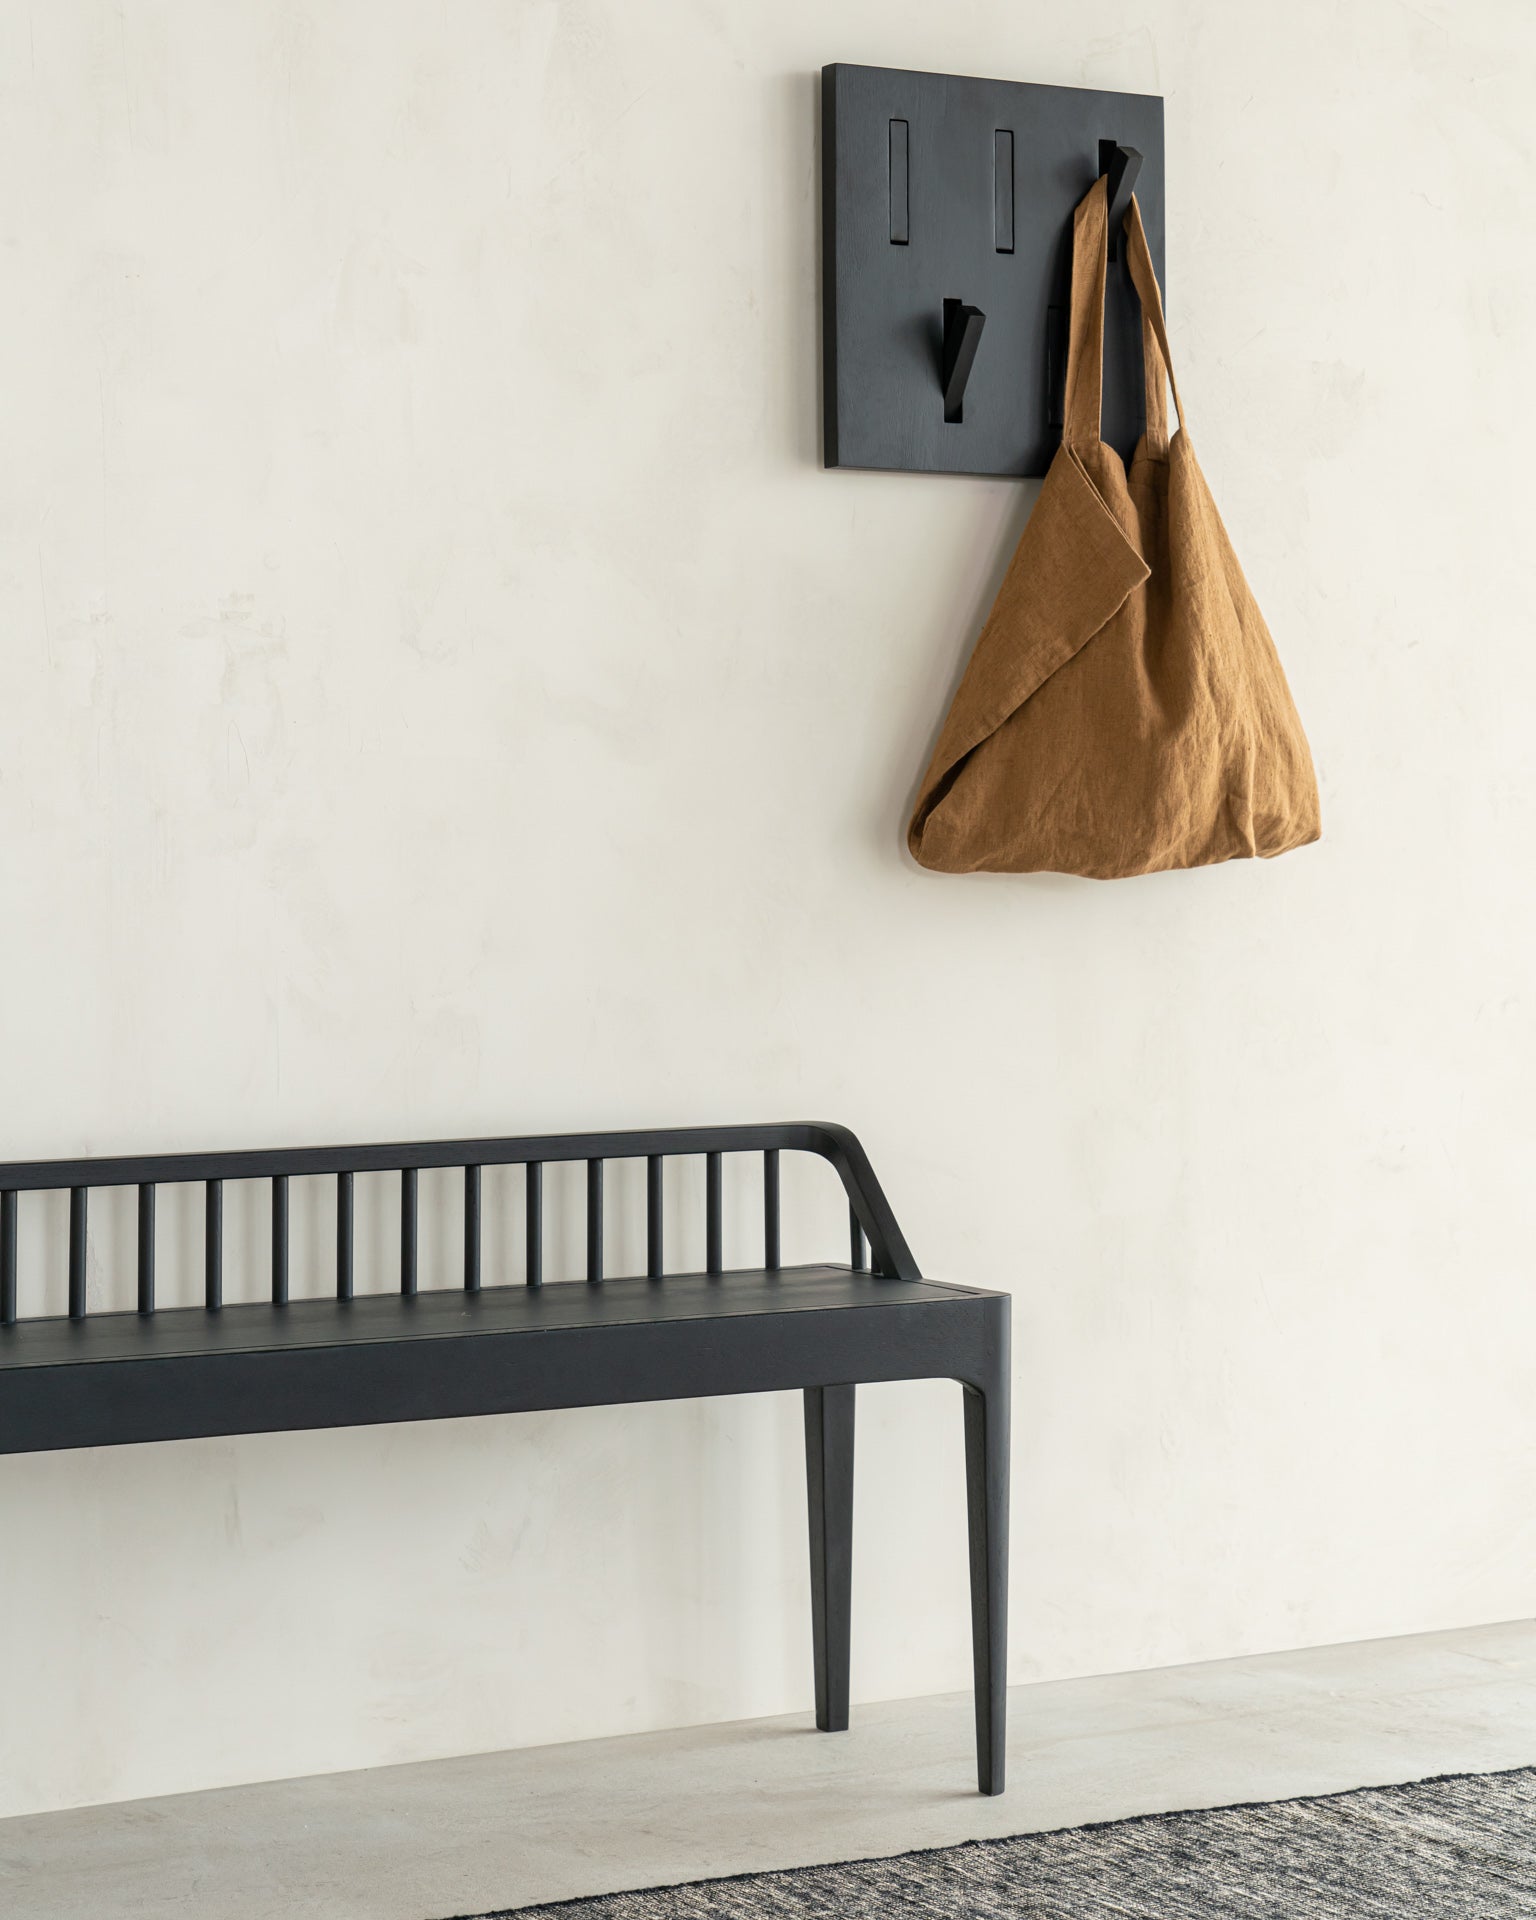 Utilitile Solid Black Oak Wall Hanger